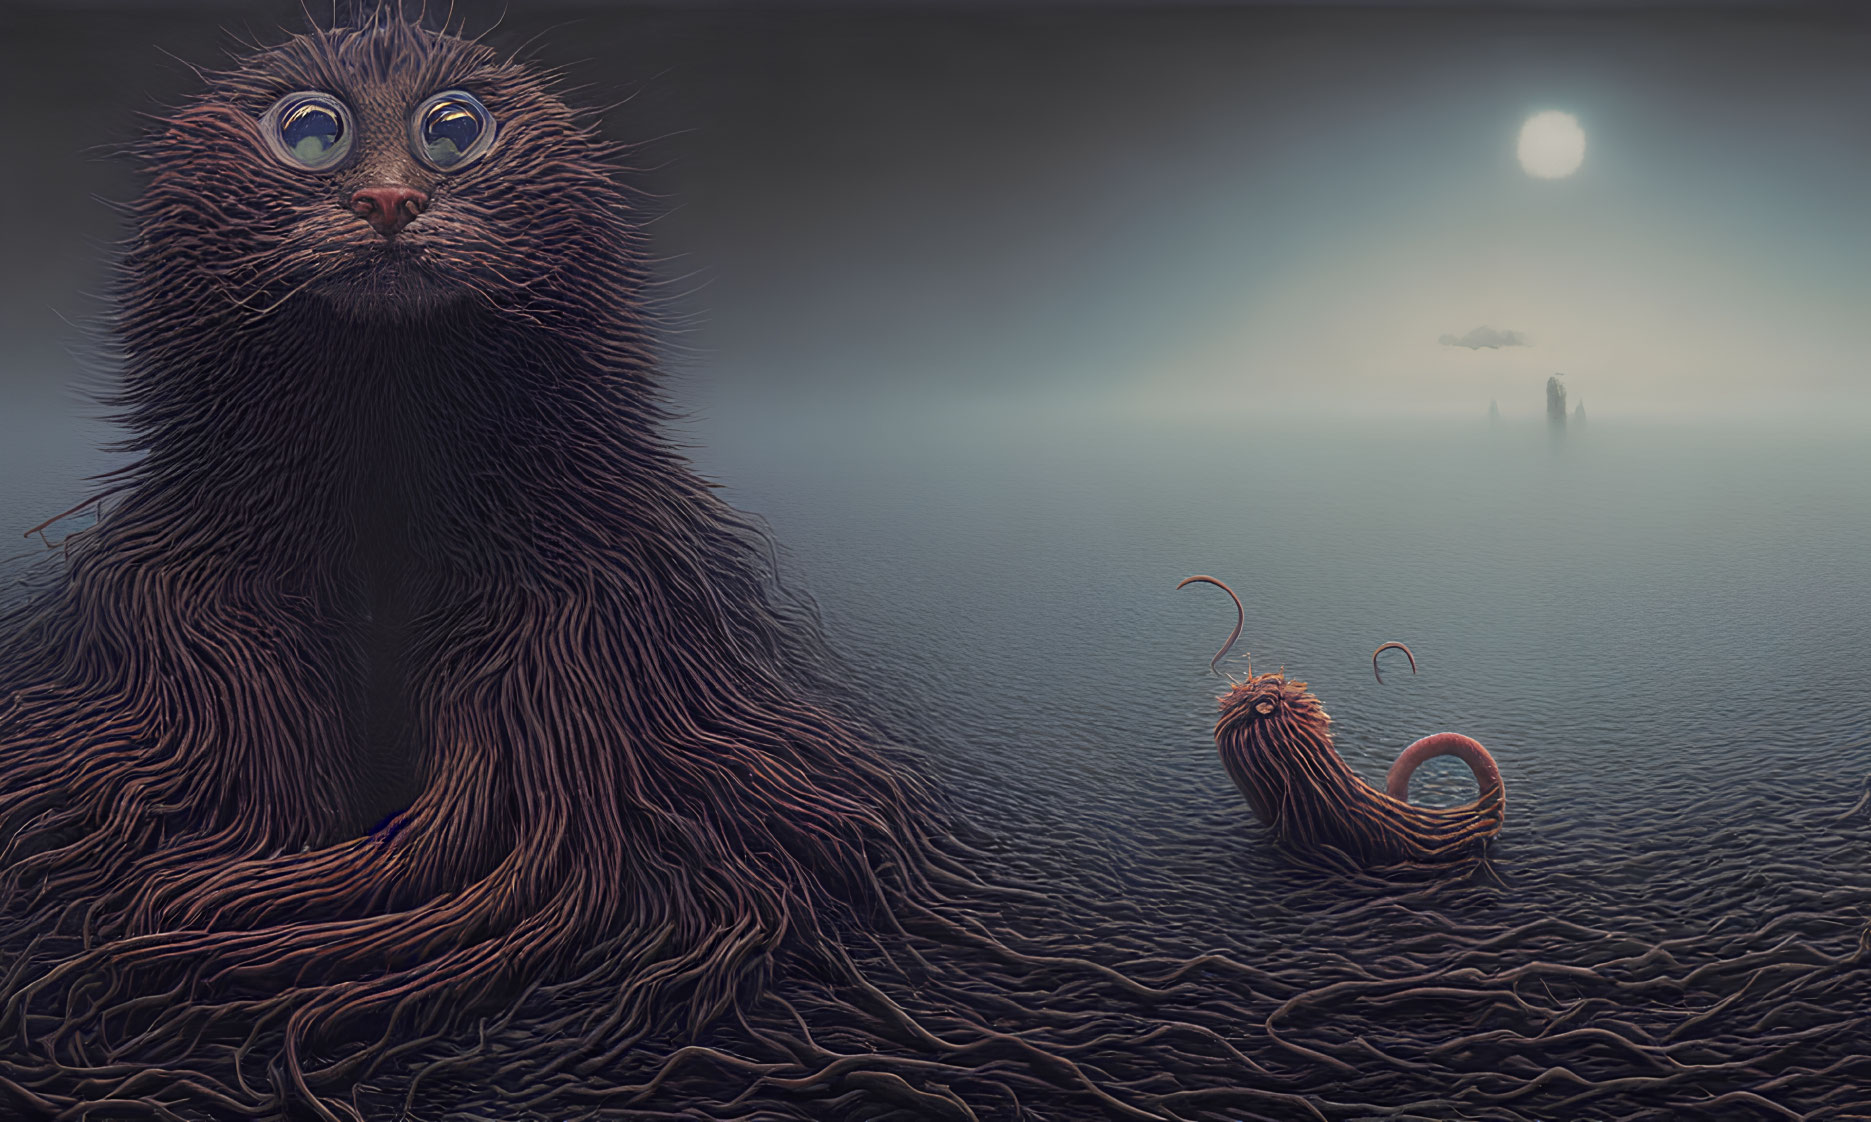 Surrealist image of large furry creature in misty landscape